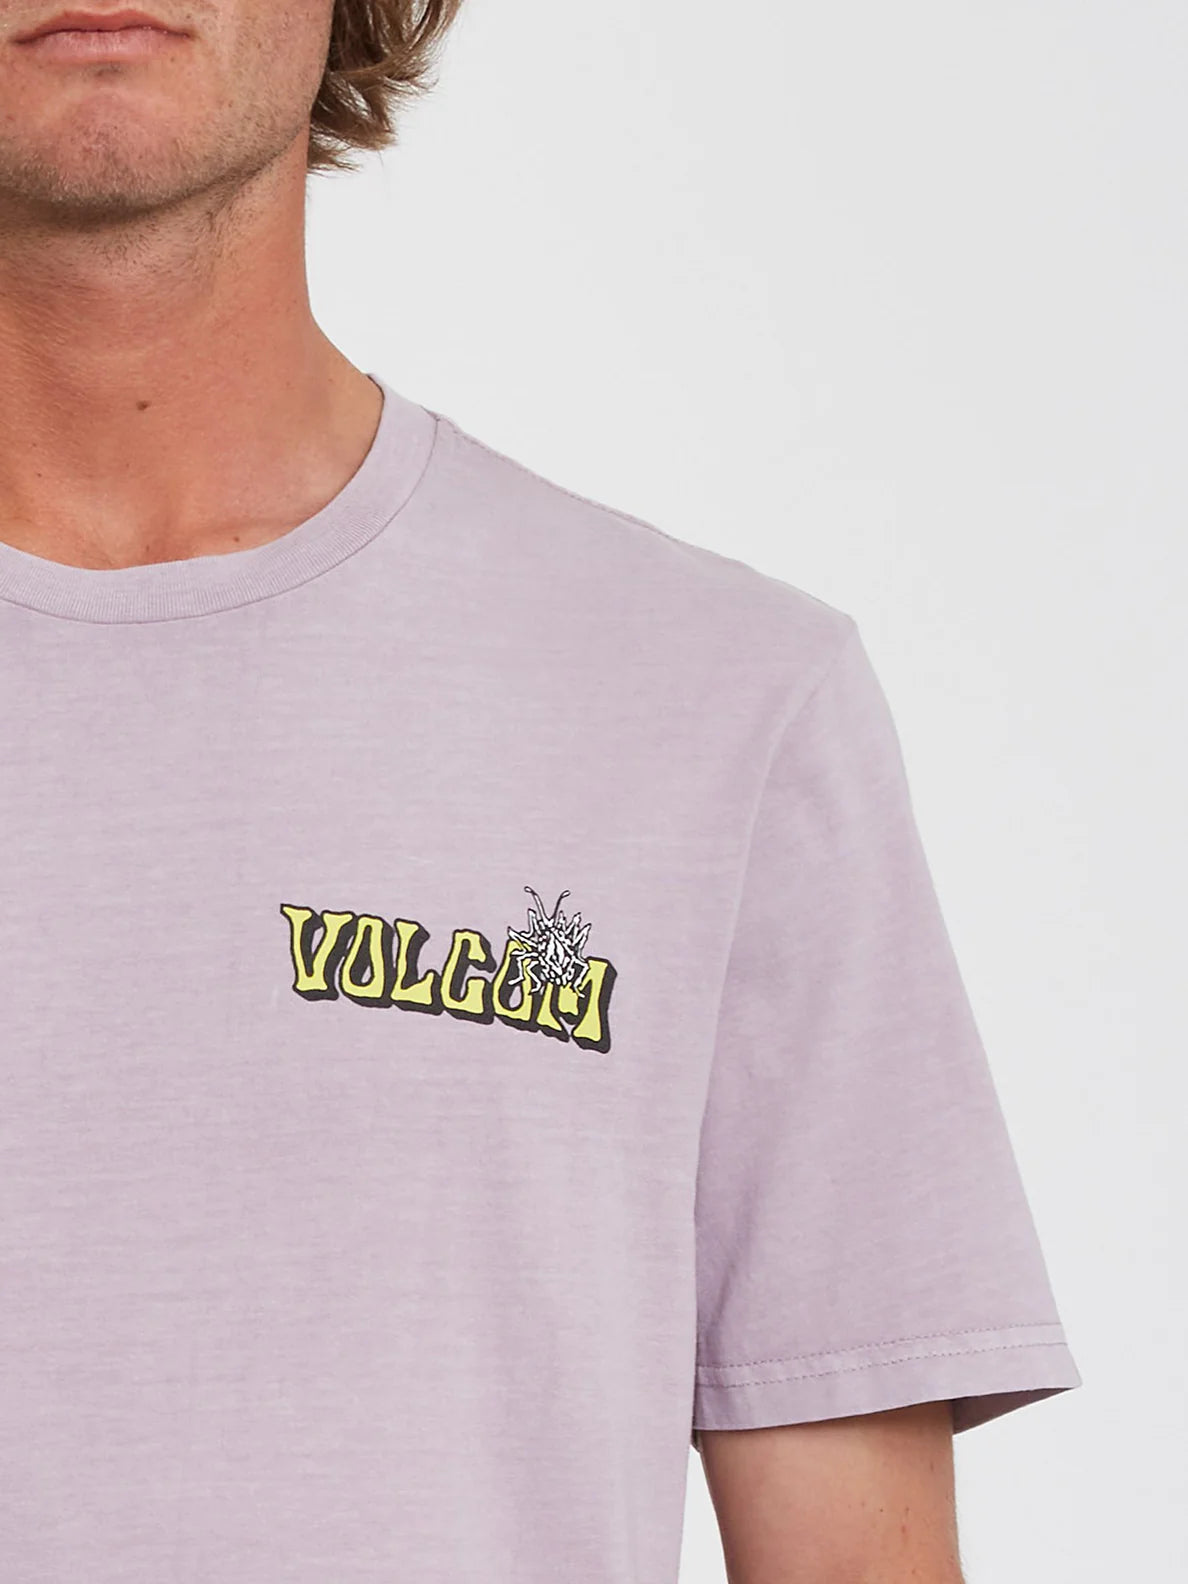 T-shirt Volcom Blox Niagara